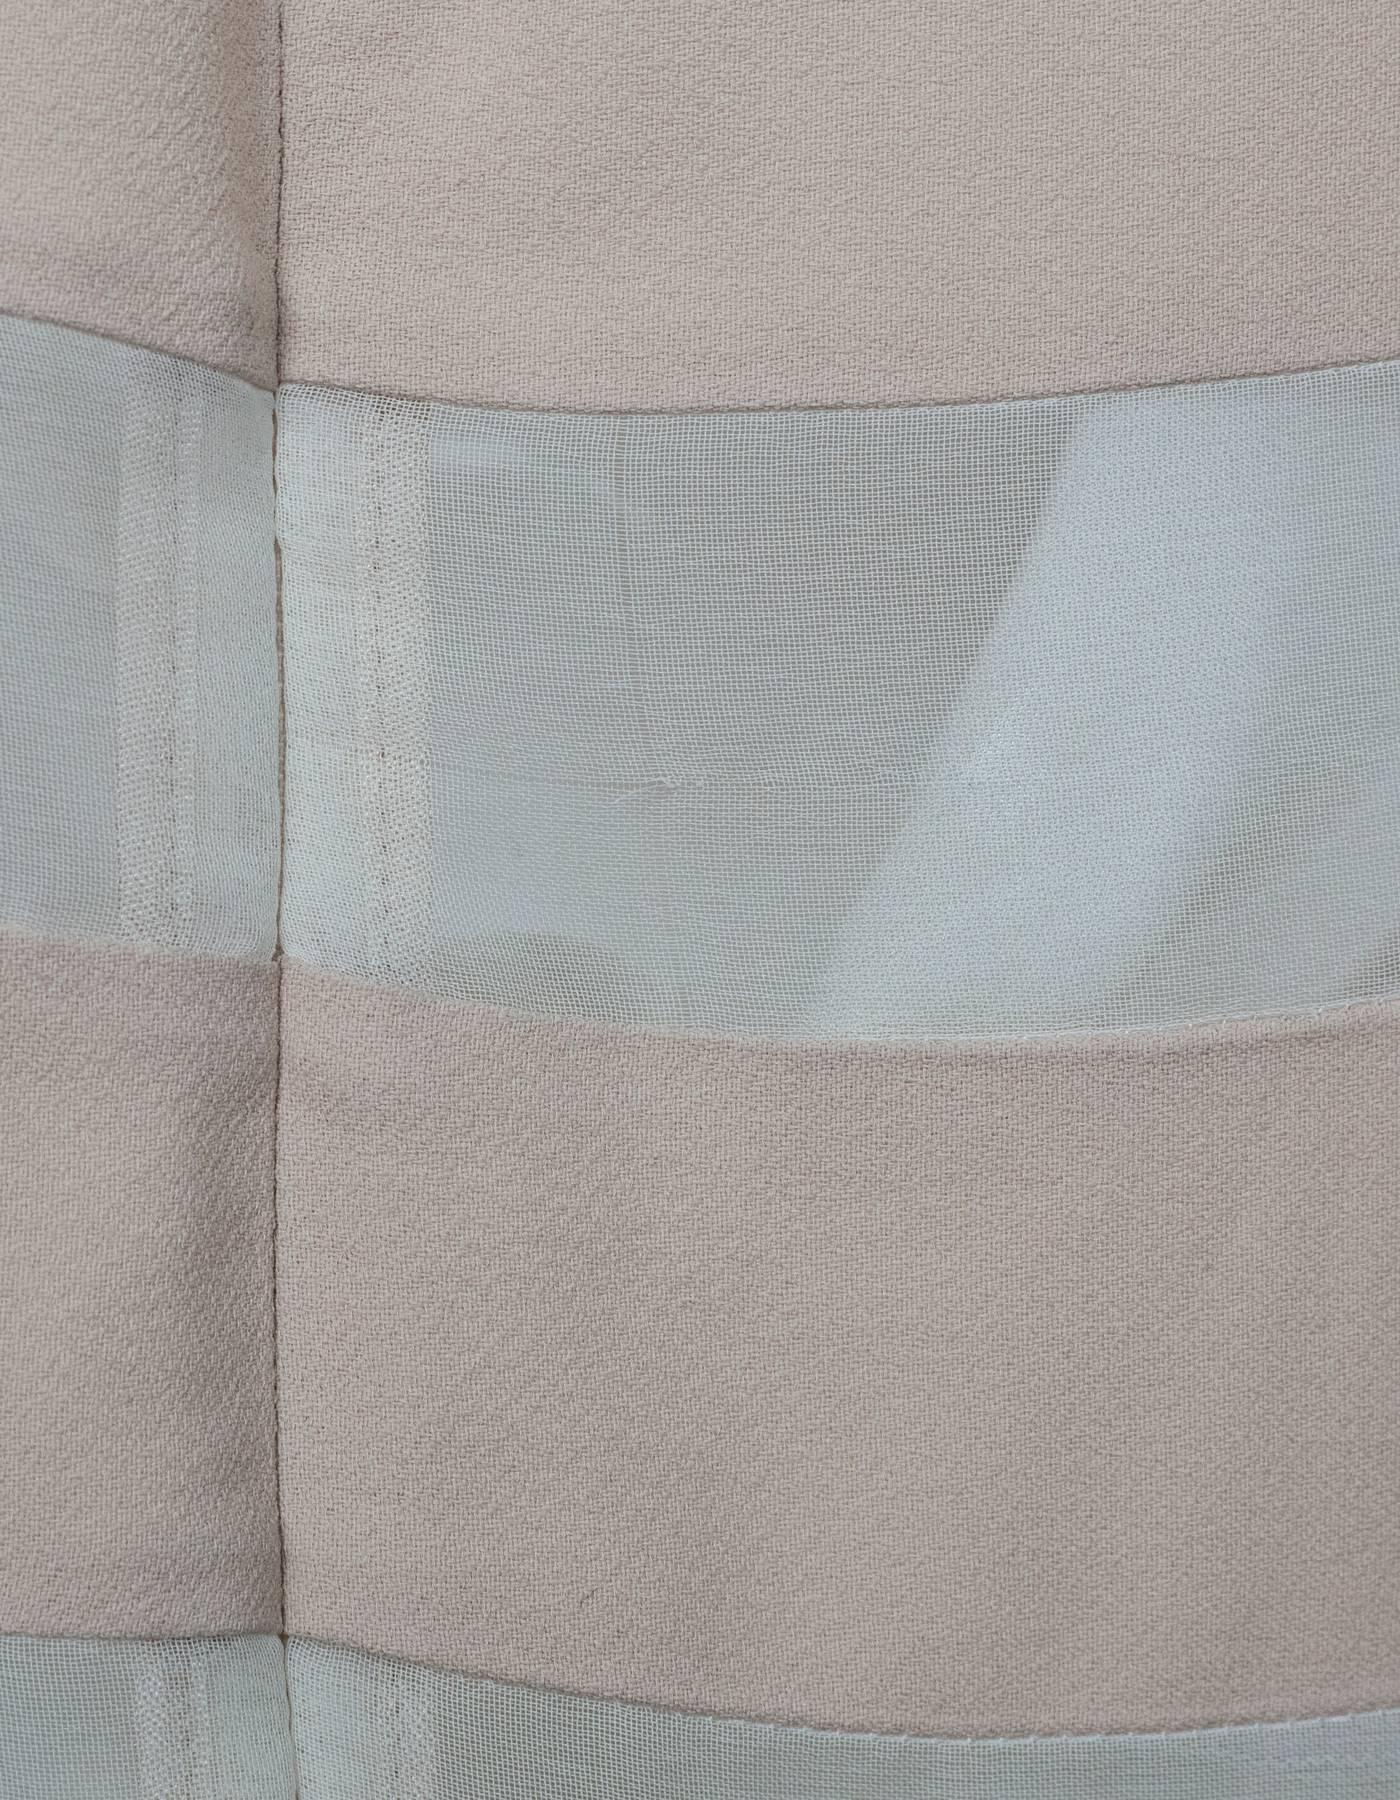 Women's Marc Jacobs Blush & Ivory Stripe Pleated Dress Sz 8